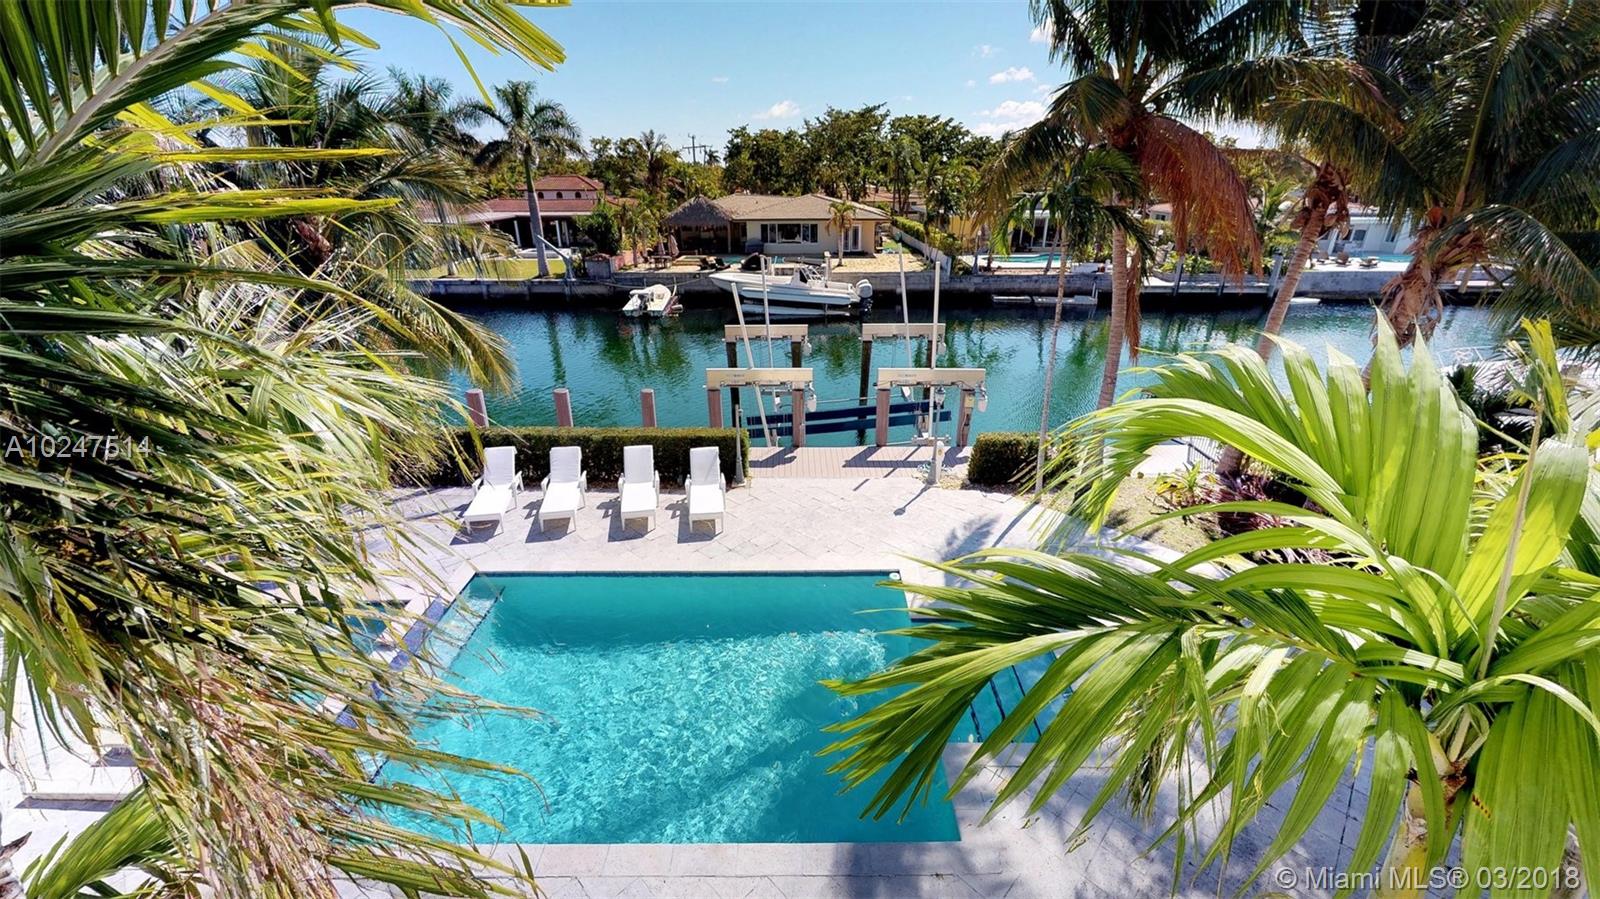 Keystone Islands Luxury Homes and Condos for Sale- Worldwide Properties